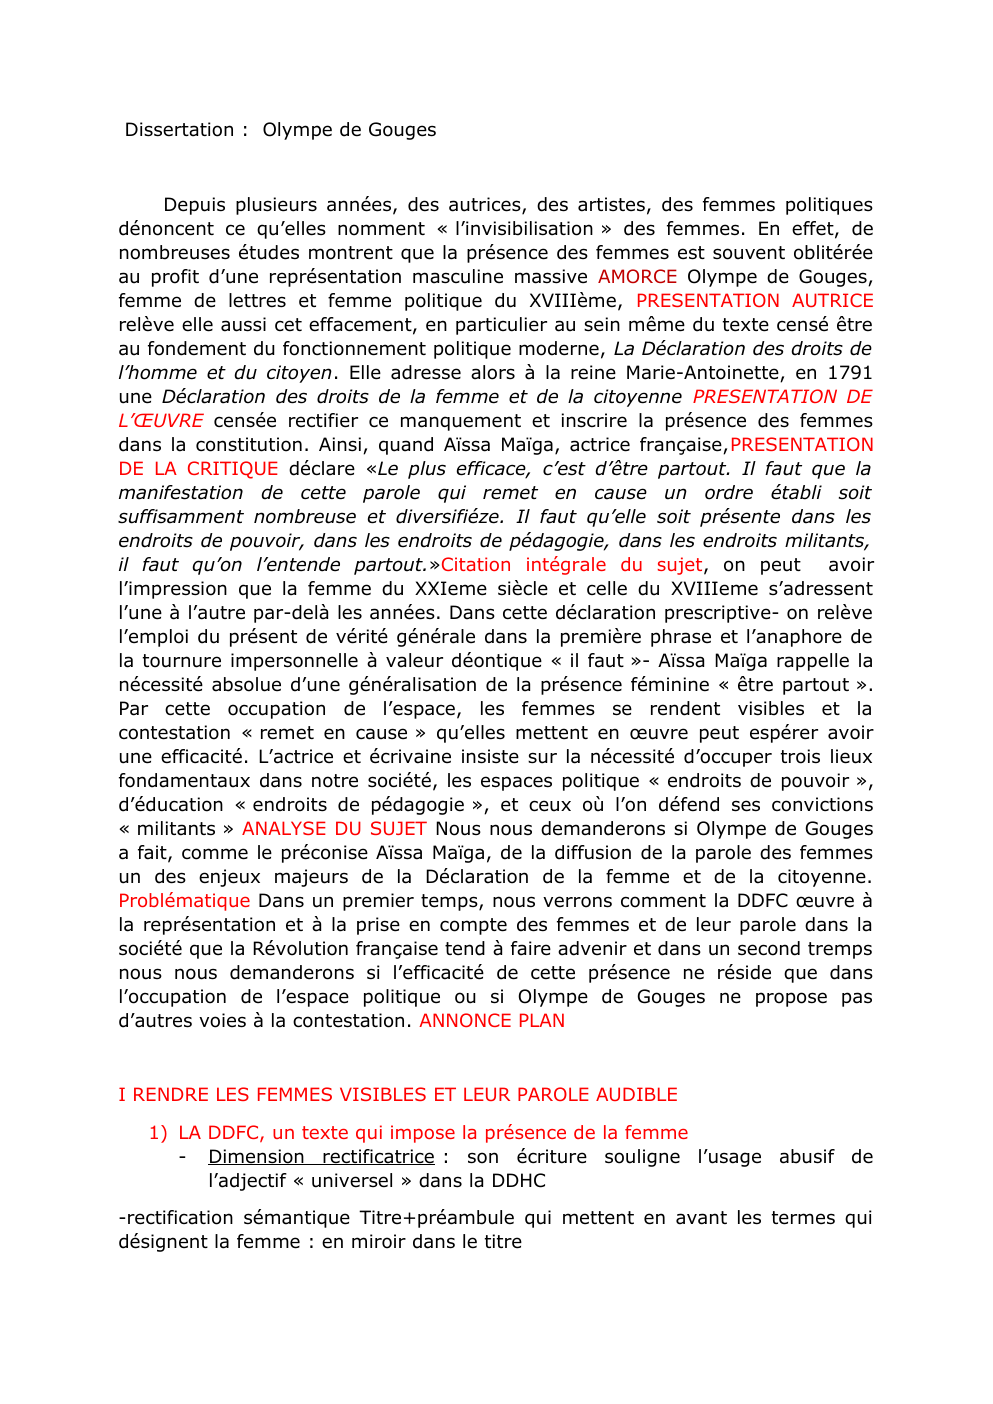 exemple dissertation olympe de gouges pdf